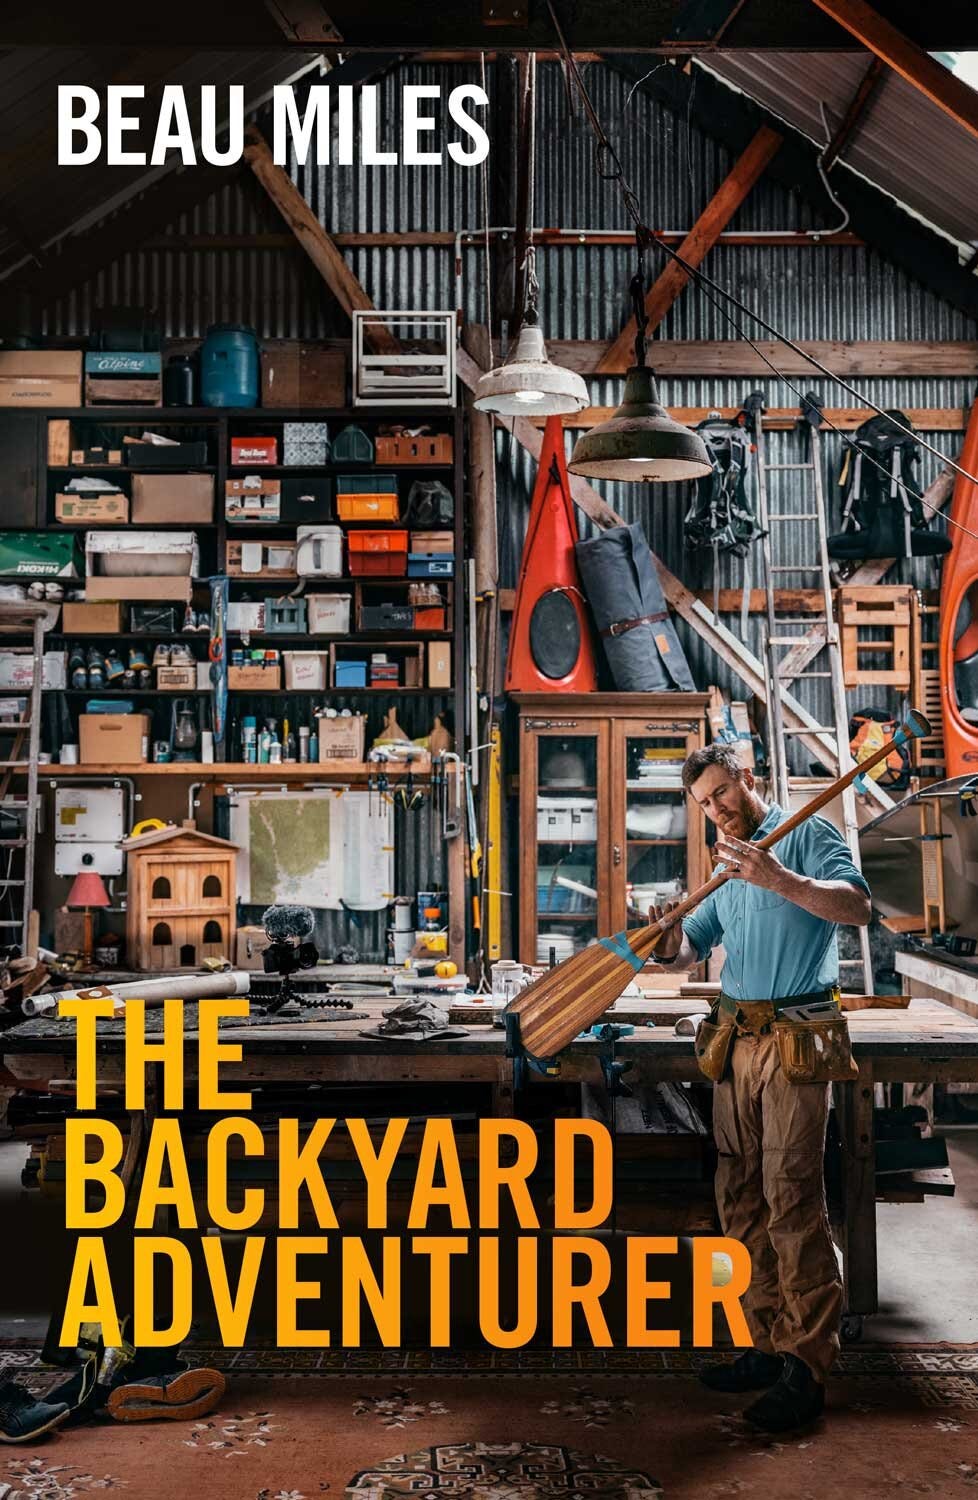 The Backyard Adventurer by Beau Miles | Goodreads